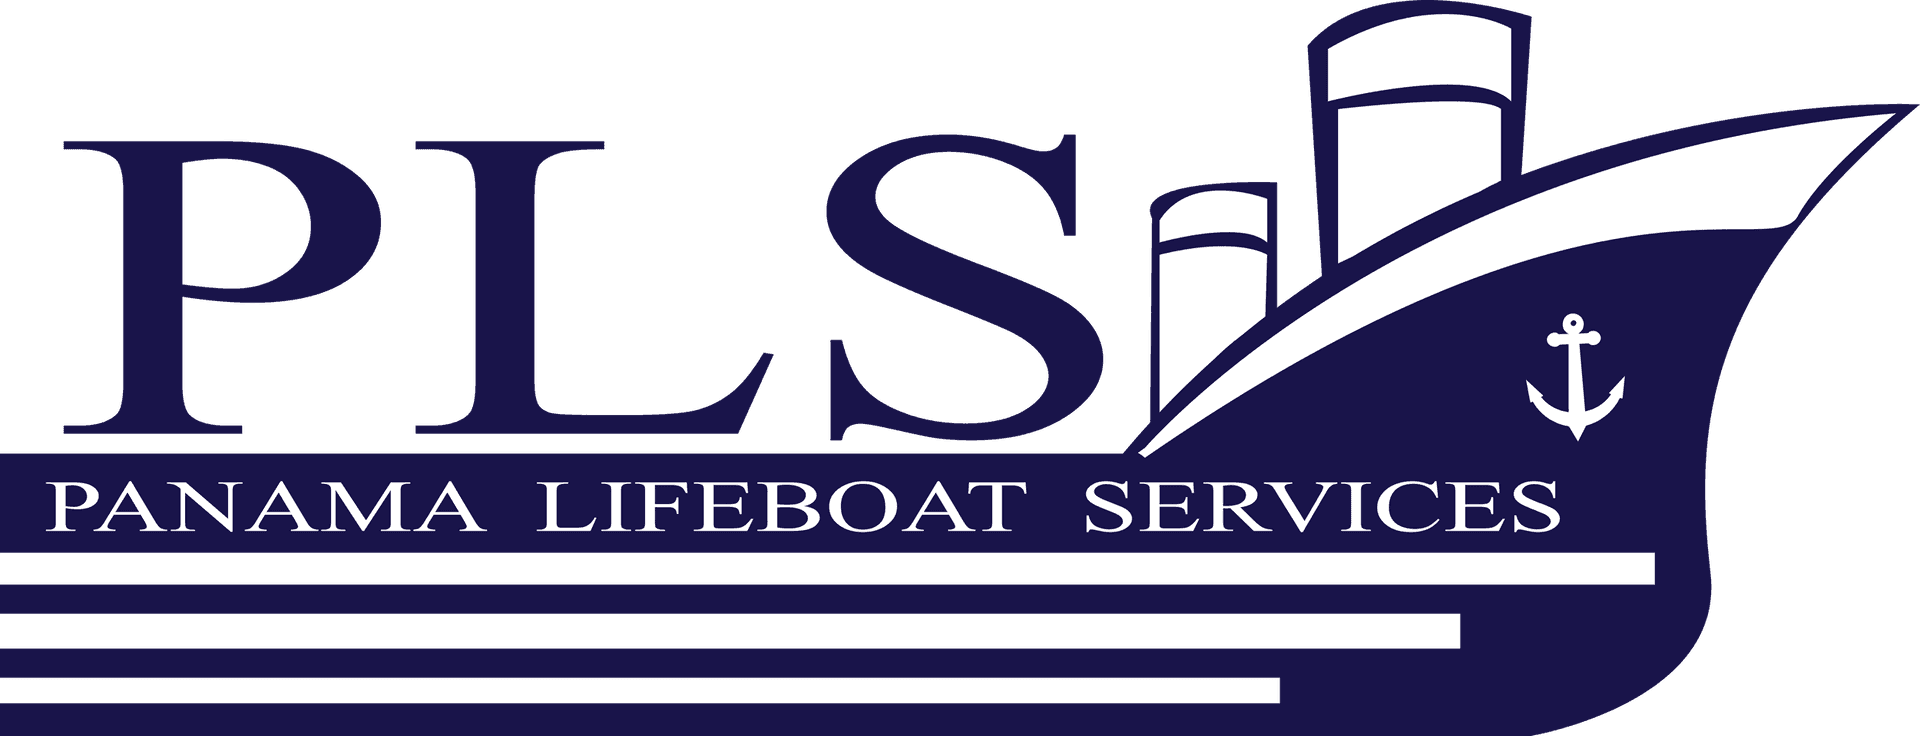 Panama Lifeboat Services Logo PNG image